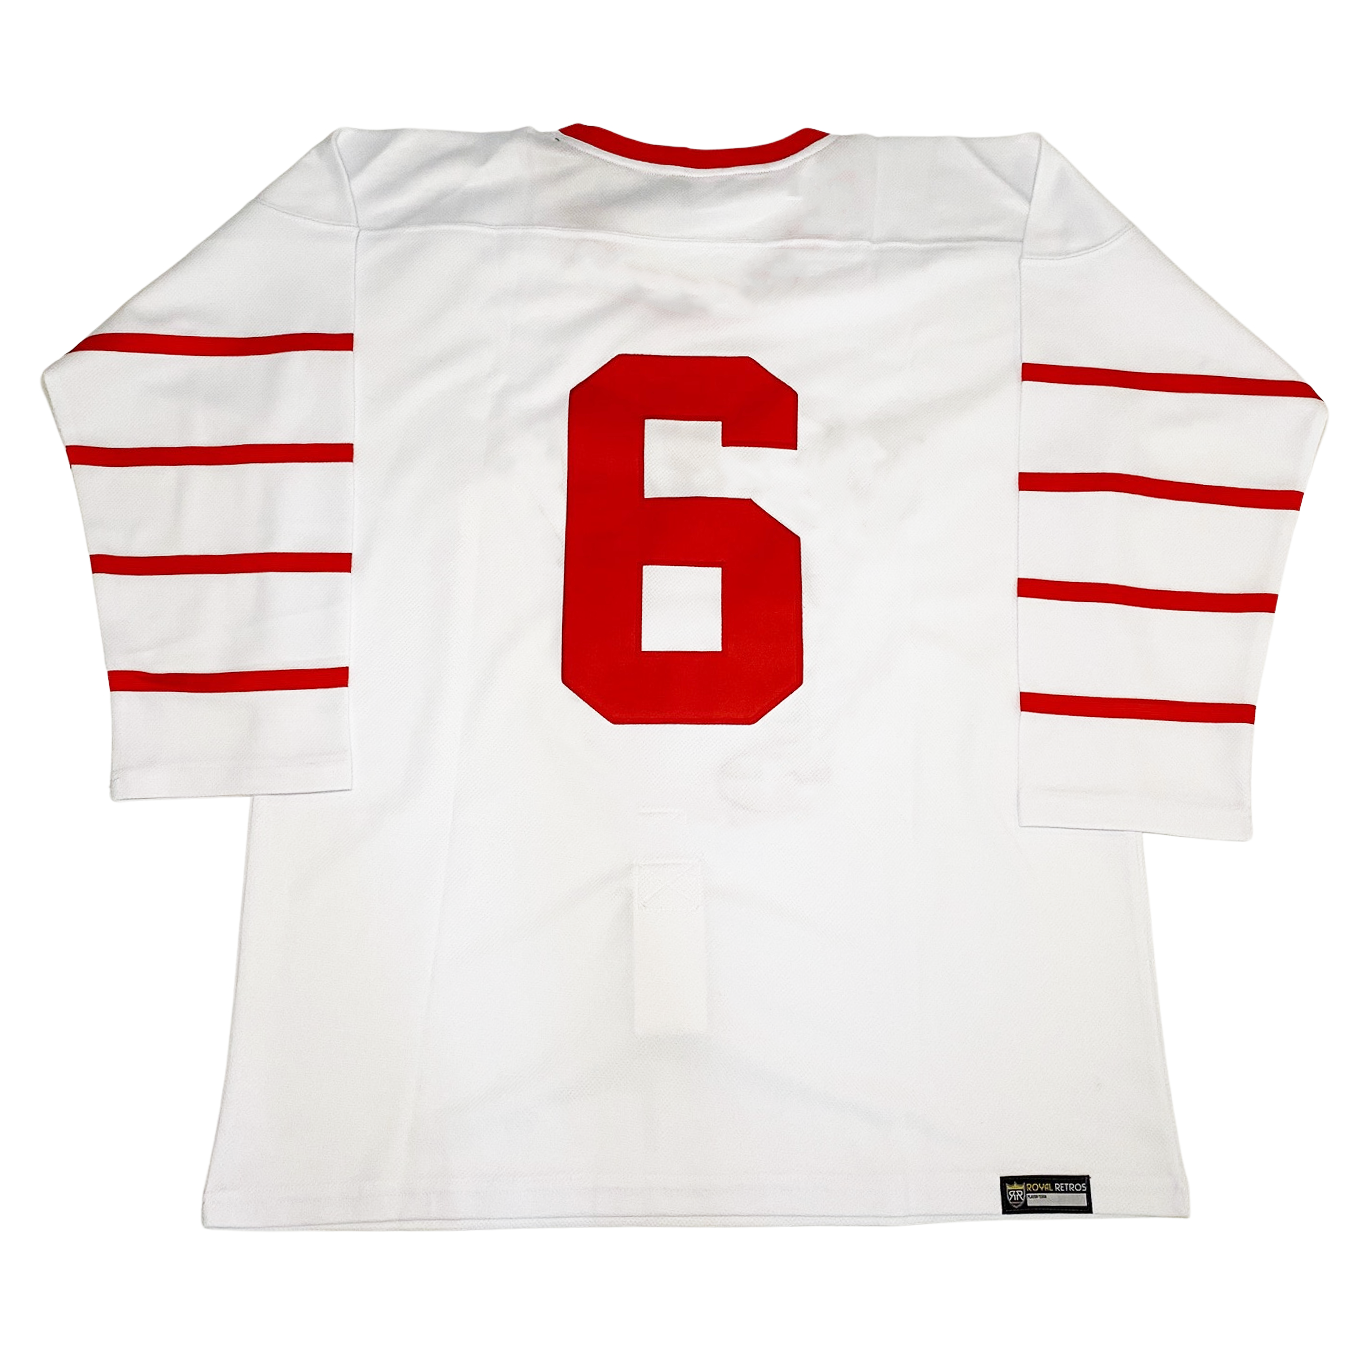 NHL Detroit Red Wings Baseball White Customized Jersey